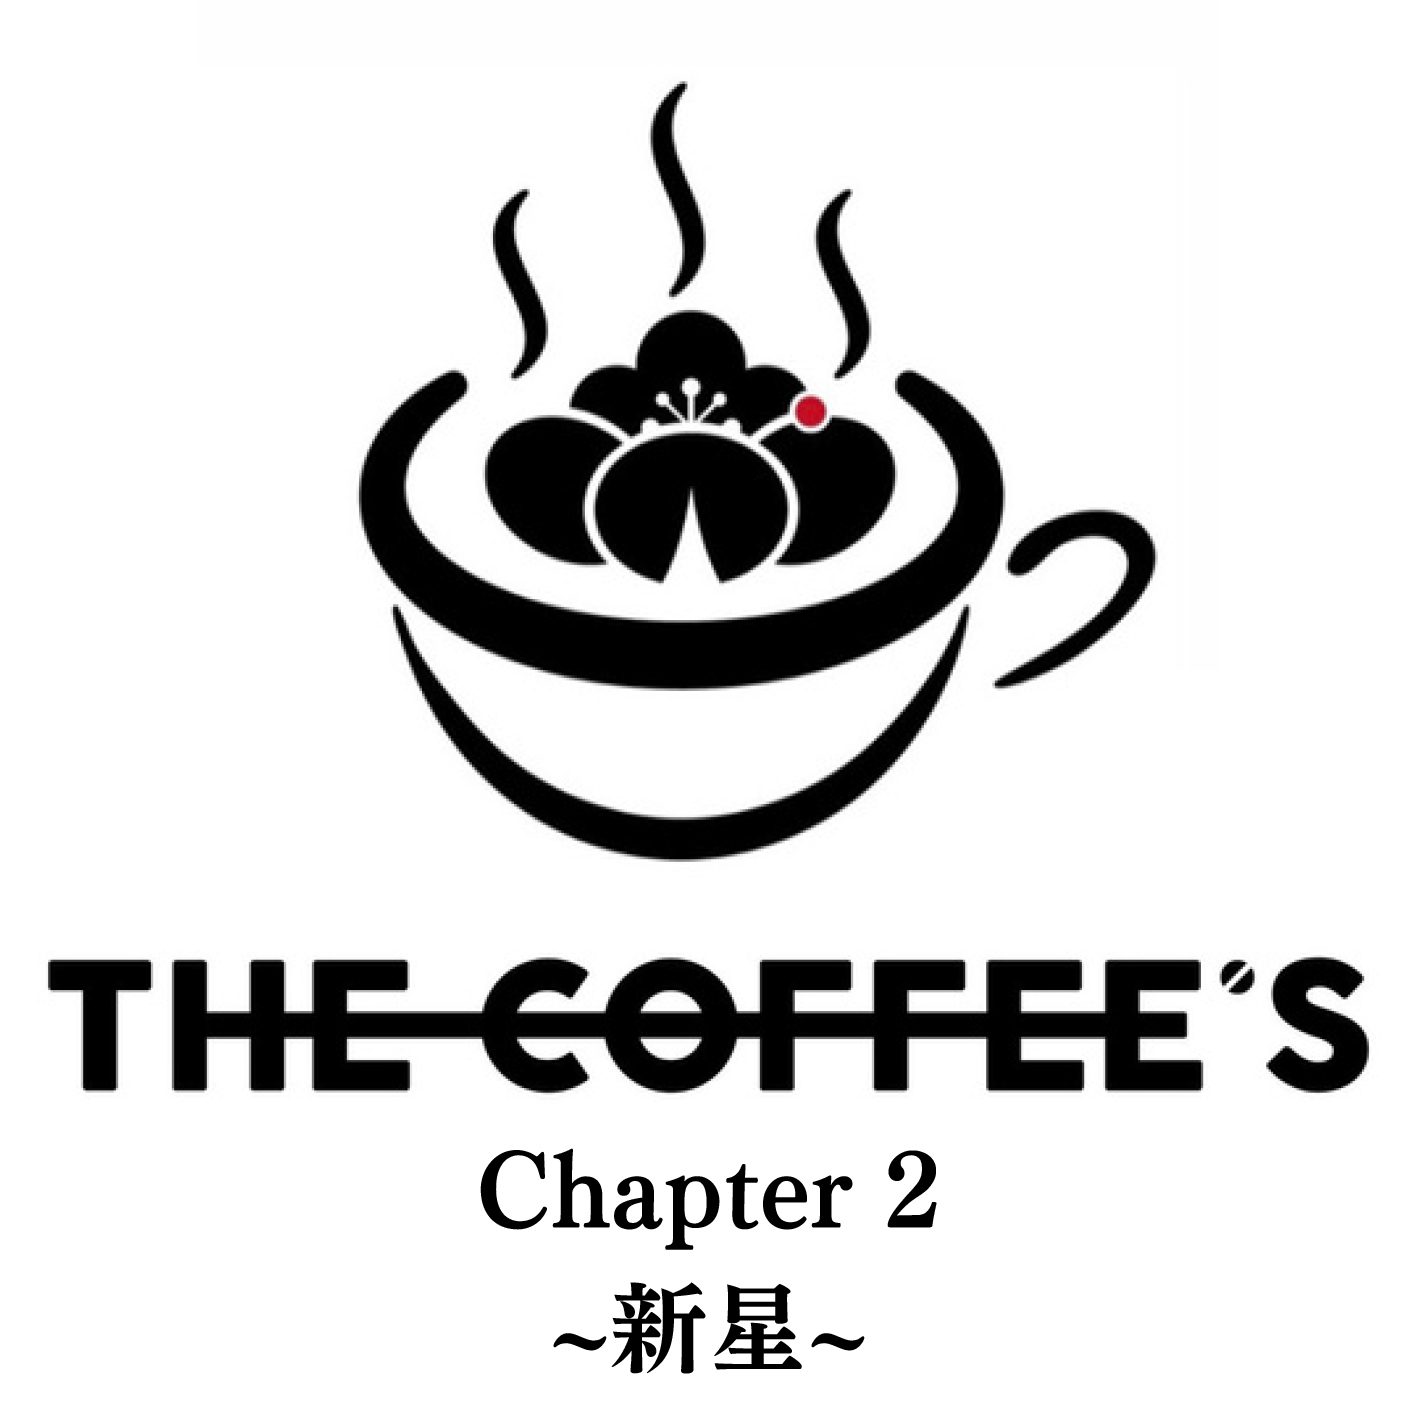 THE COFFEE'S